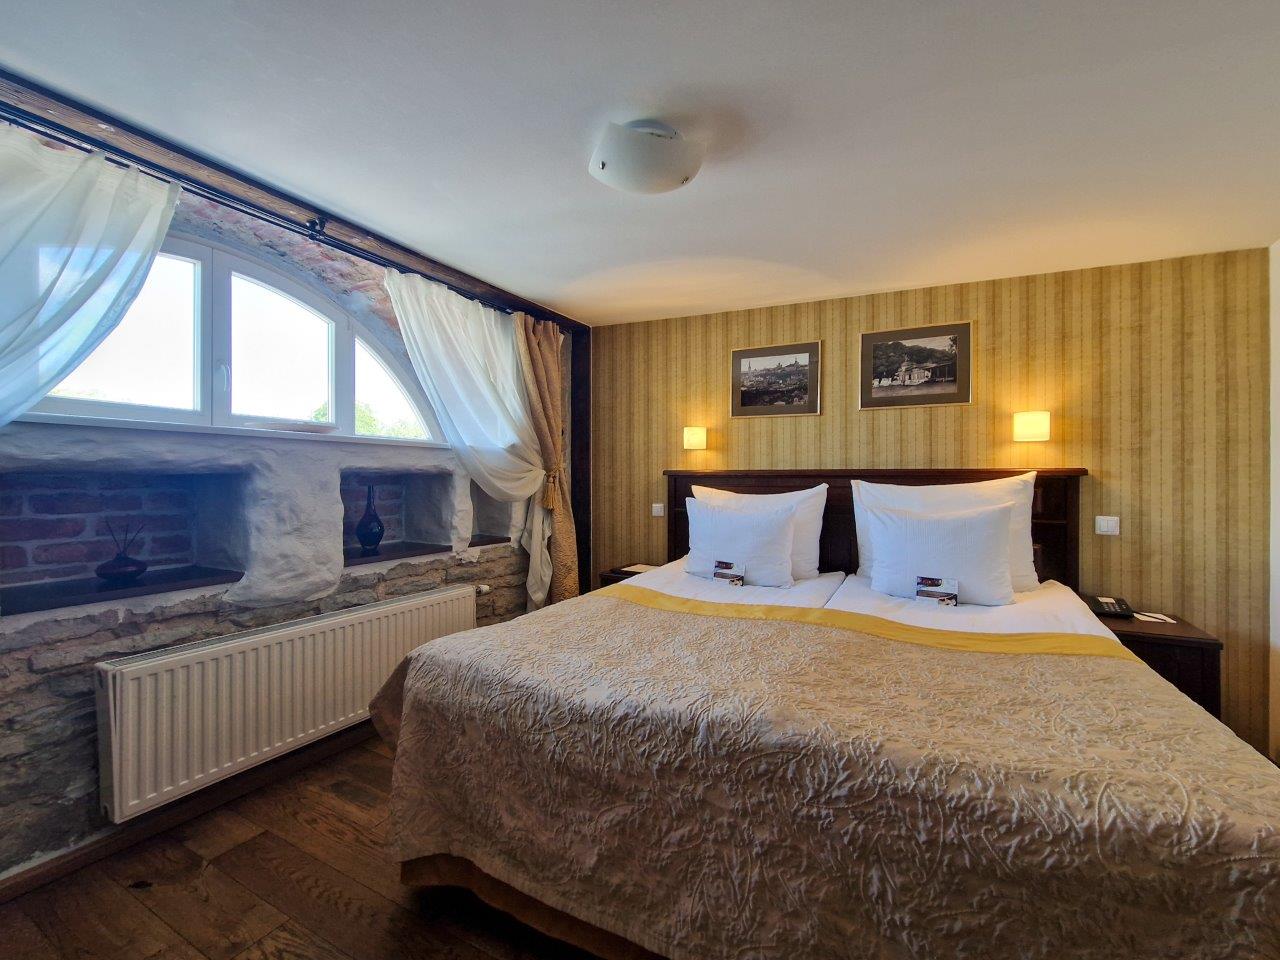 Hotelkamer van het Von Stackelberg Hotel in Tallinn